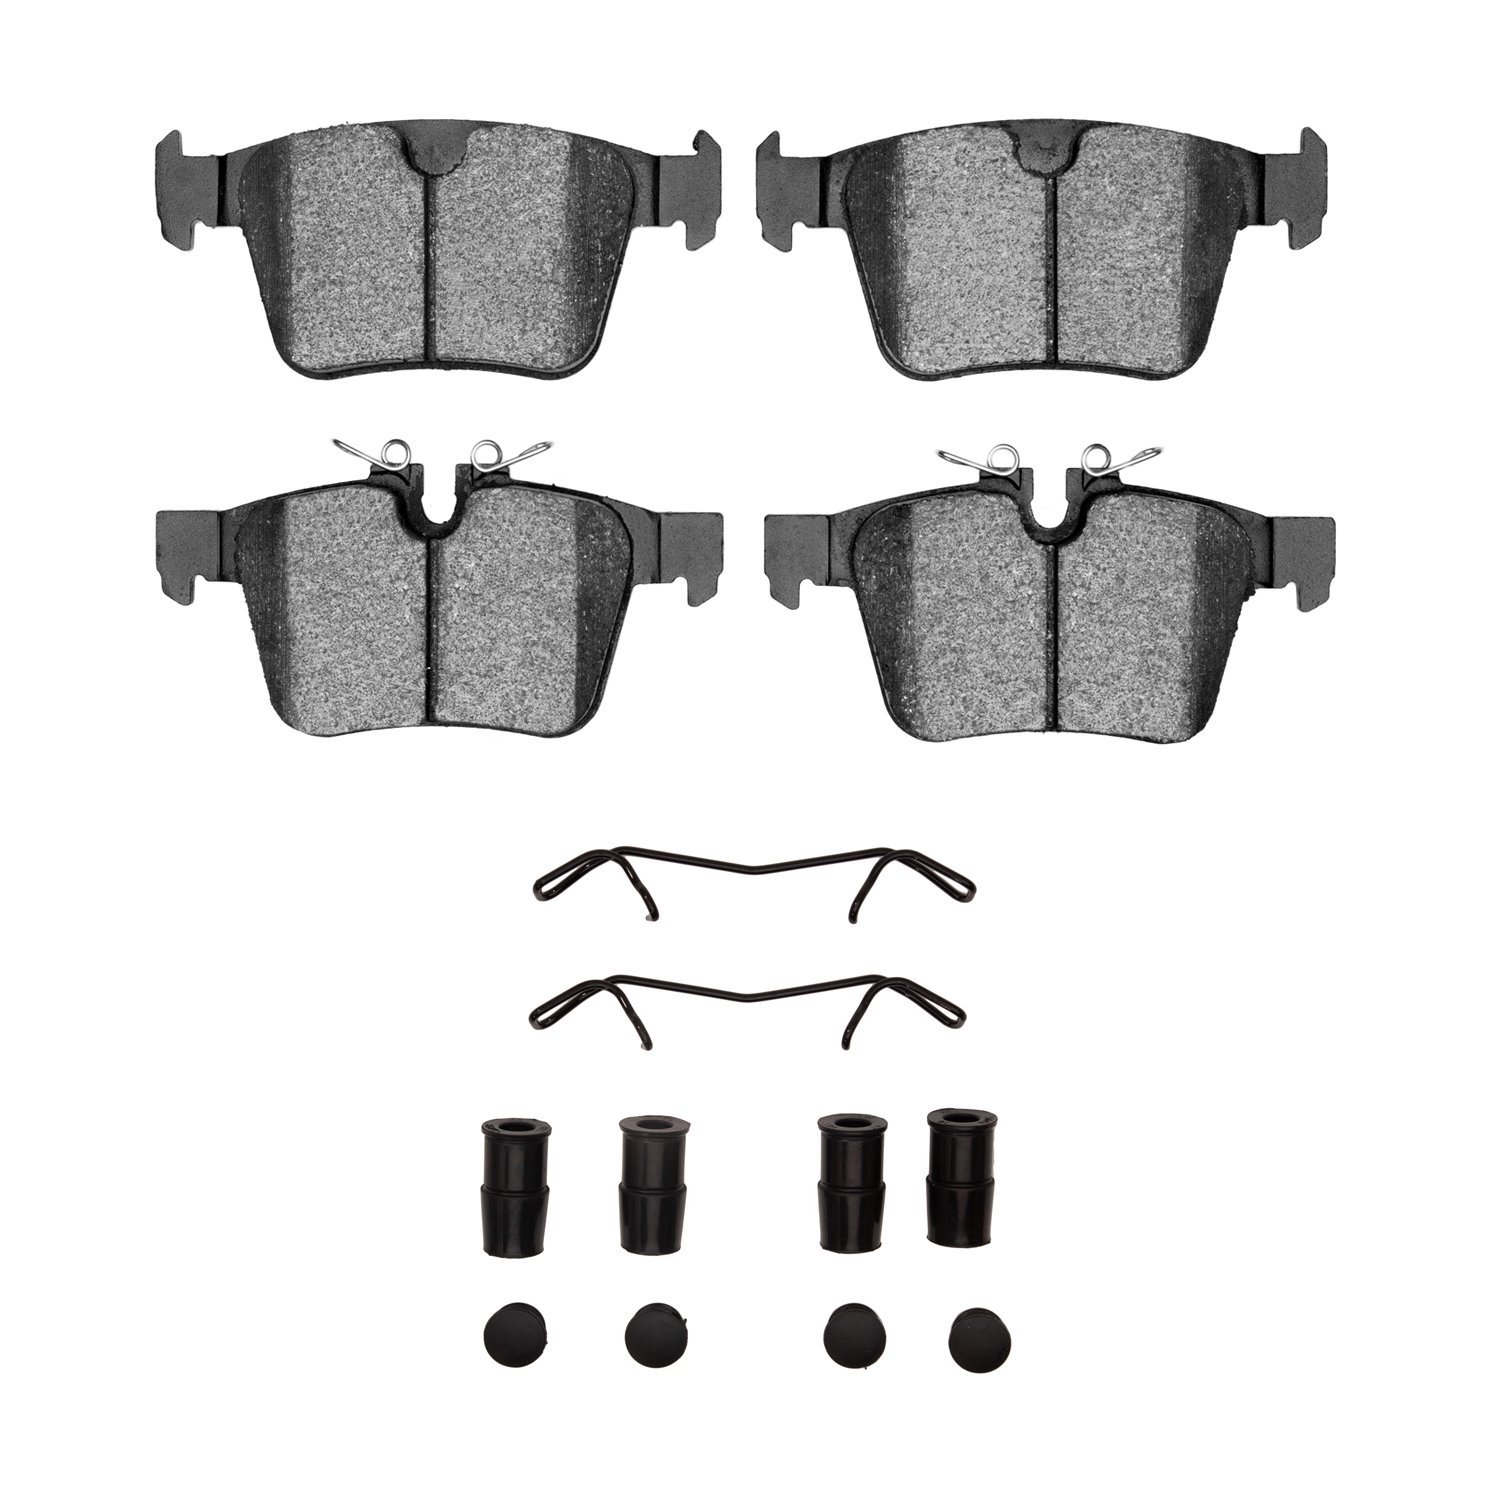 1310-1821-01 3000-Series Ceramic Brake Pads & Hardware Kit, Fits Select Multiple Makes/Models, Position: Rear